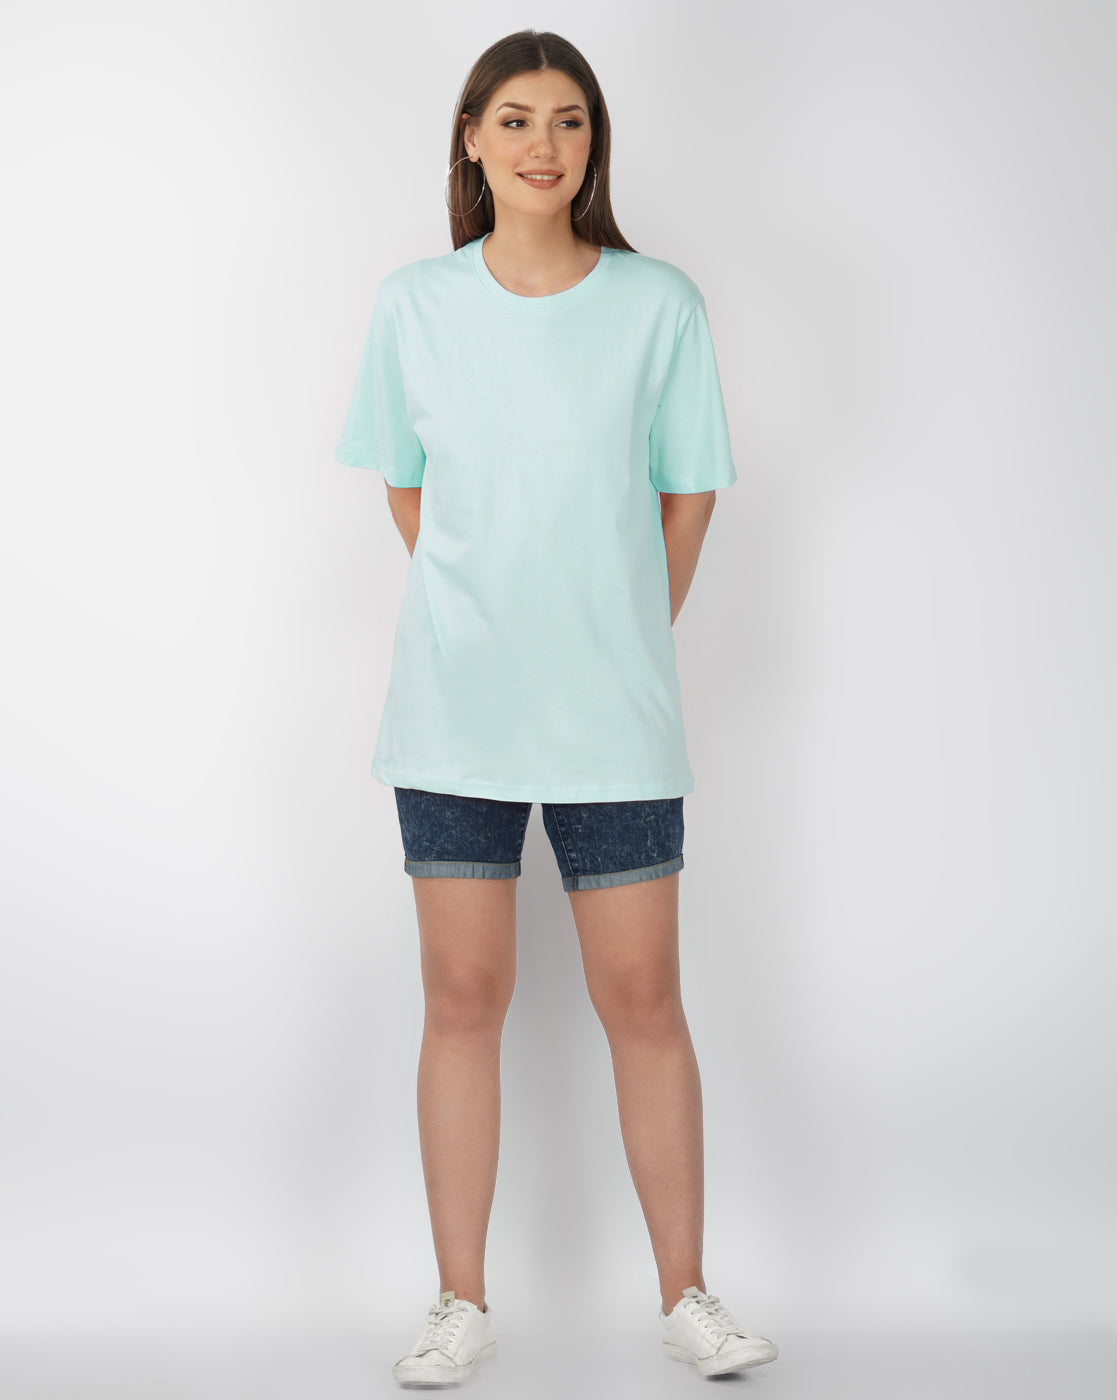 Nusyl Women Powder Blue Rainbow pint oversized t-shirt